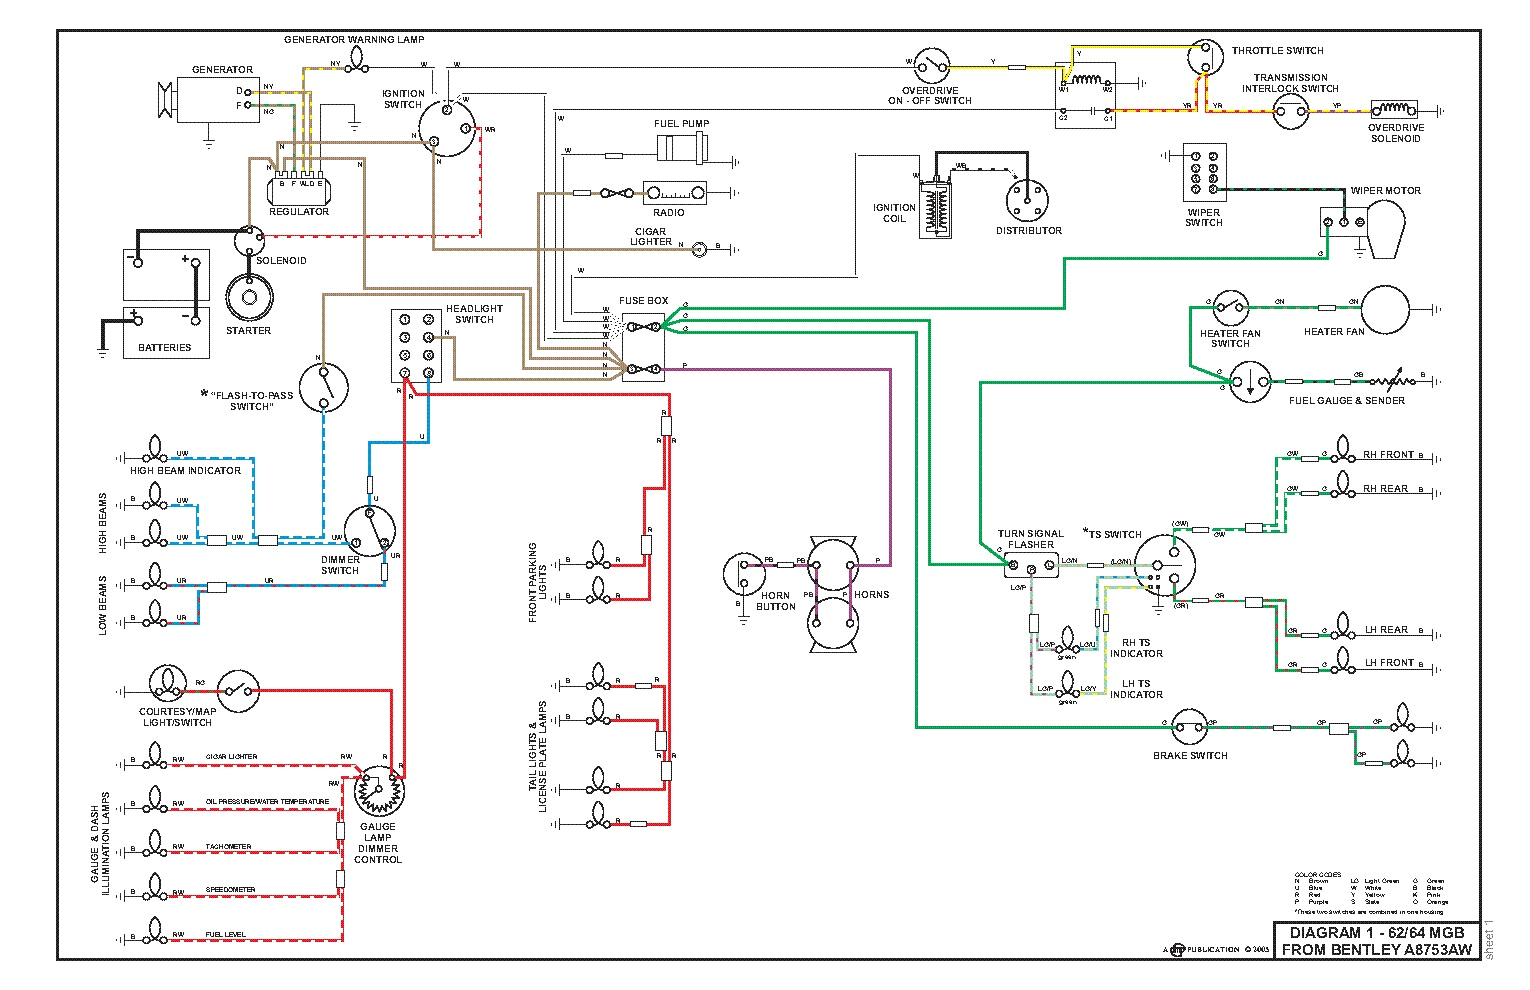 auto wiring diagram pdf wiring diagram fascinating auto air conditioning wiring diagram pdf auto wiring diagram pdf